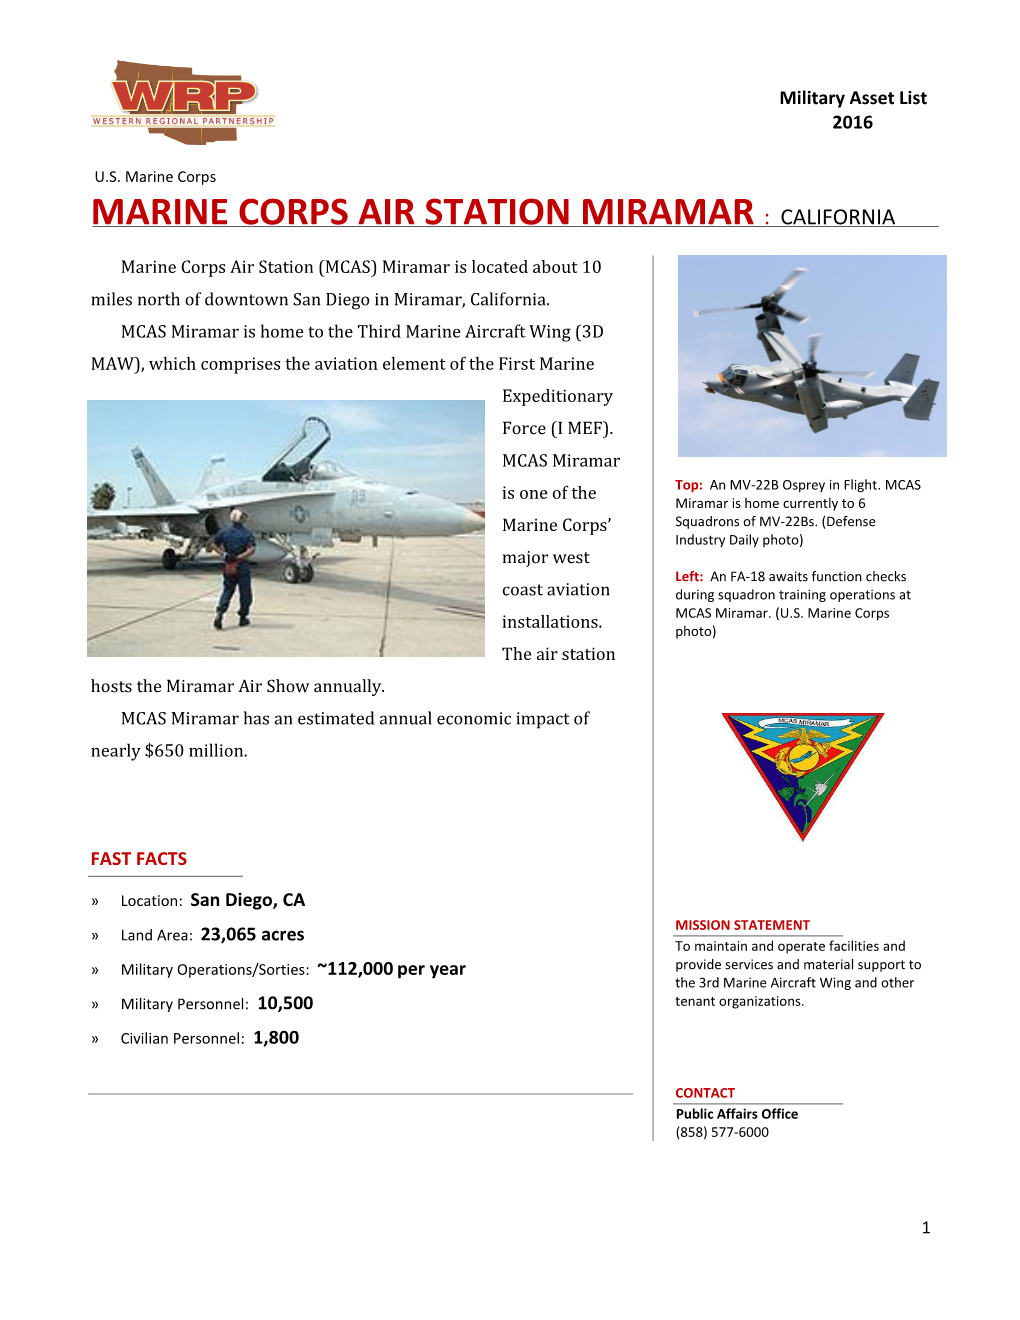 Marine Corps Air Station Miramar : California